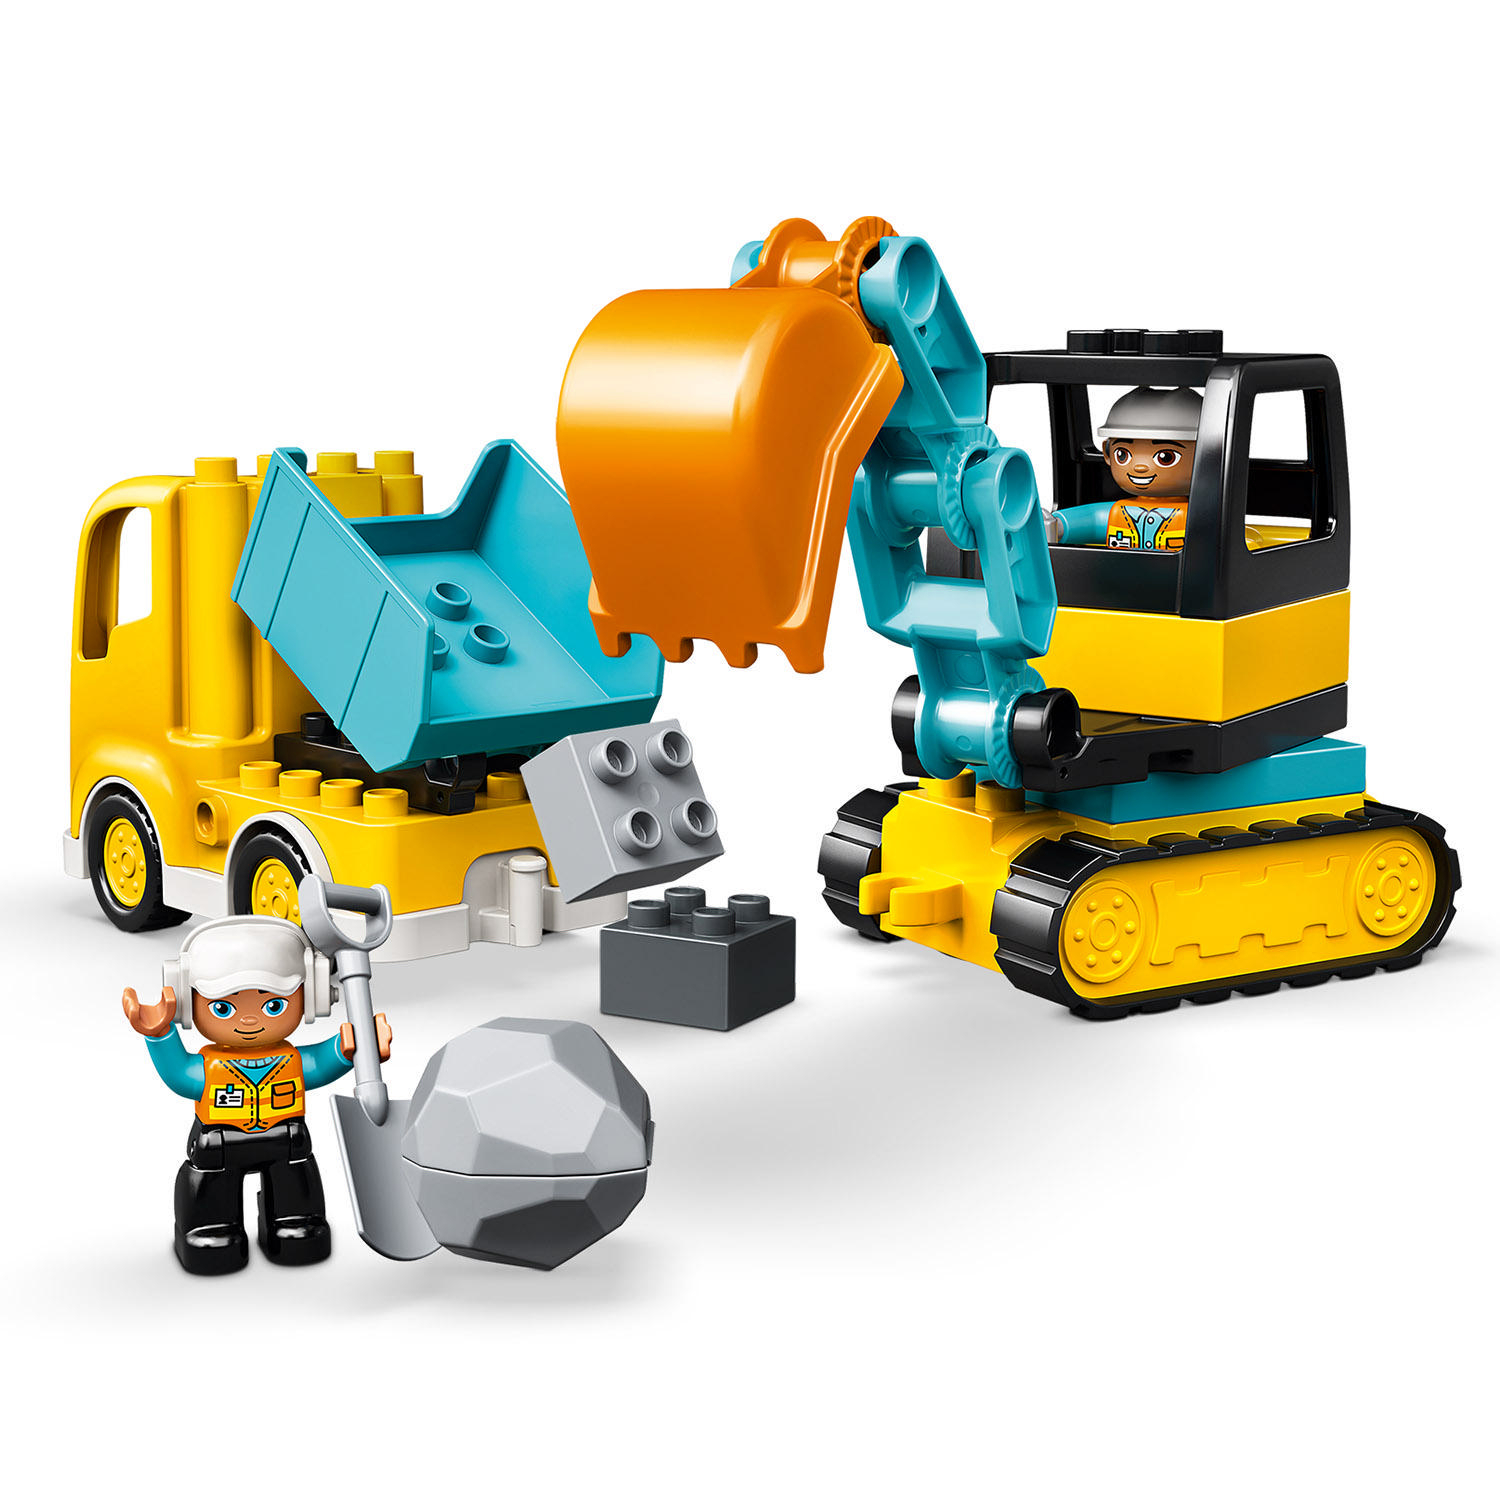 und Bagger LEGO Mehrfarbig Bausatz, Laster 10931